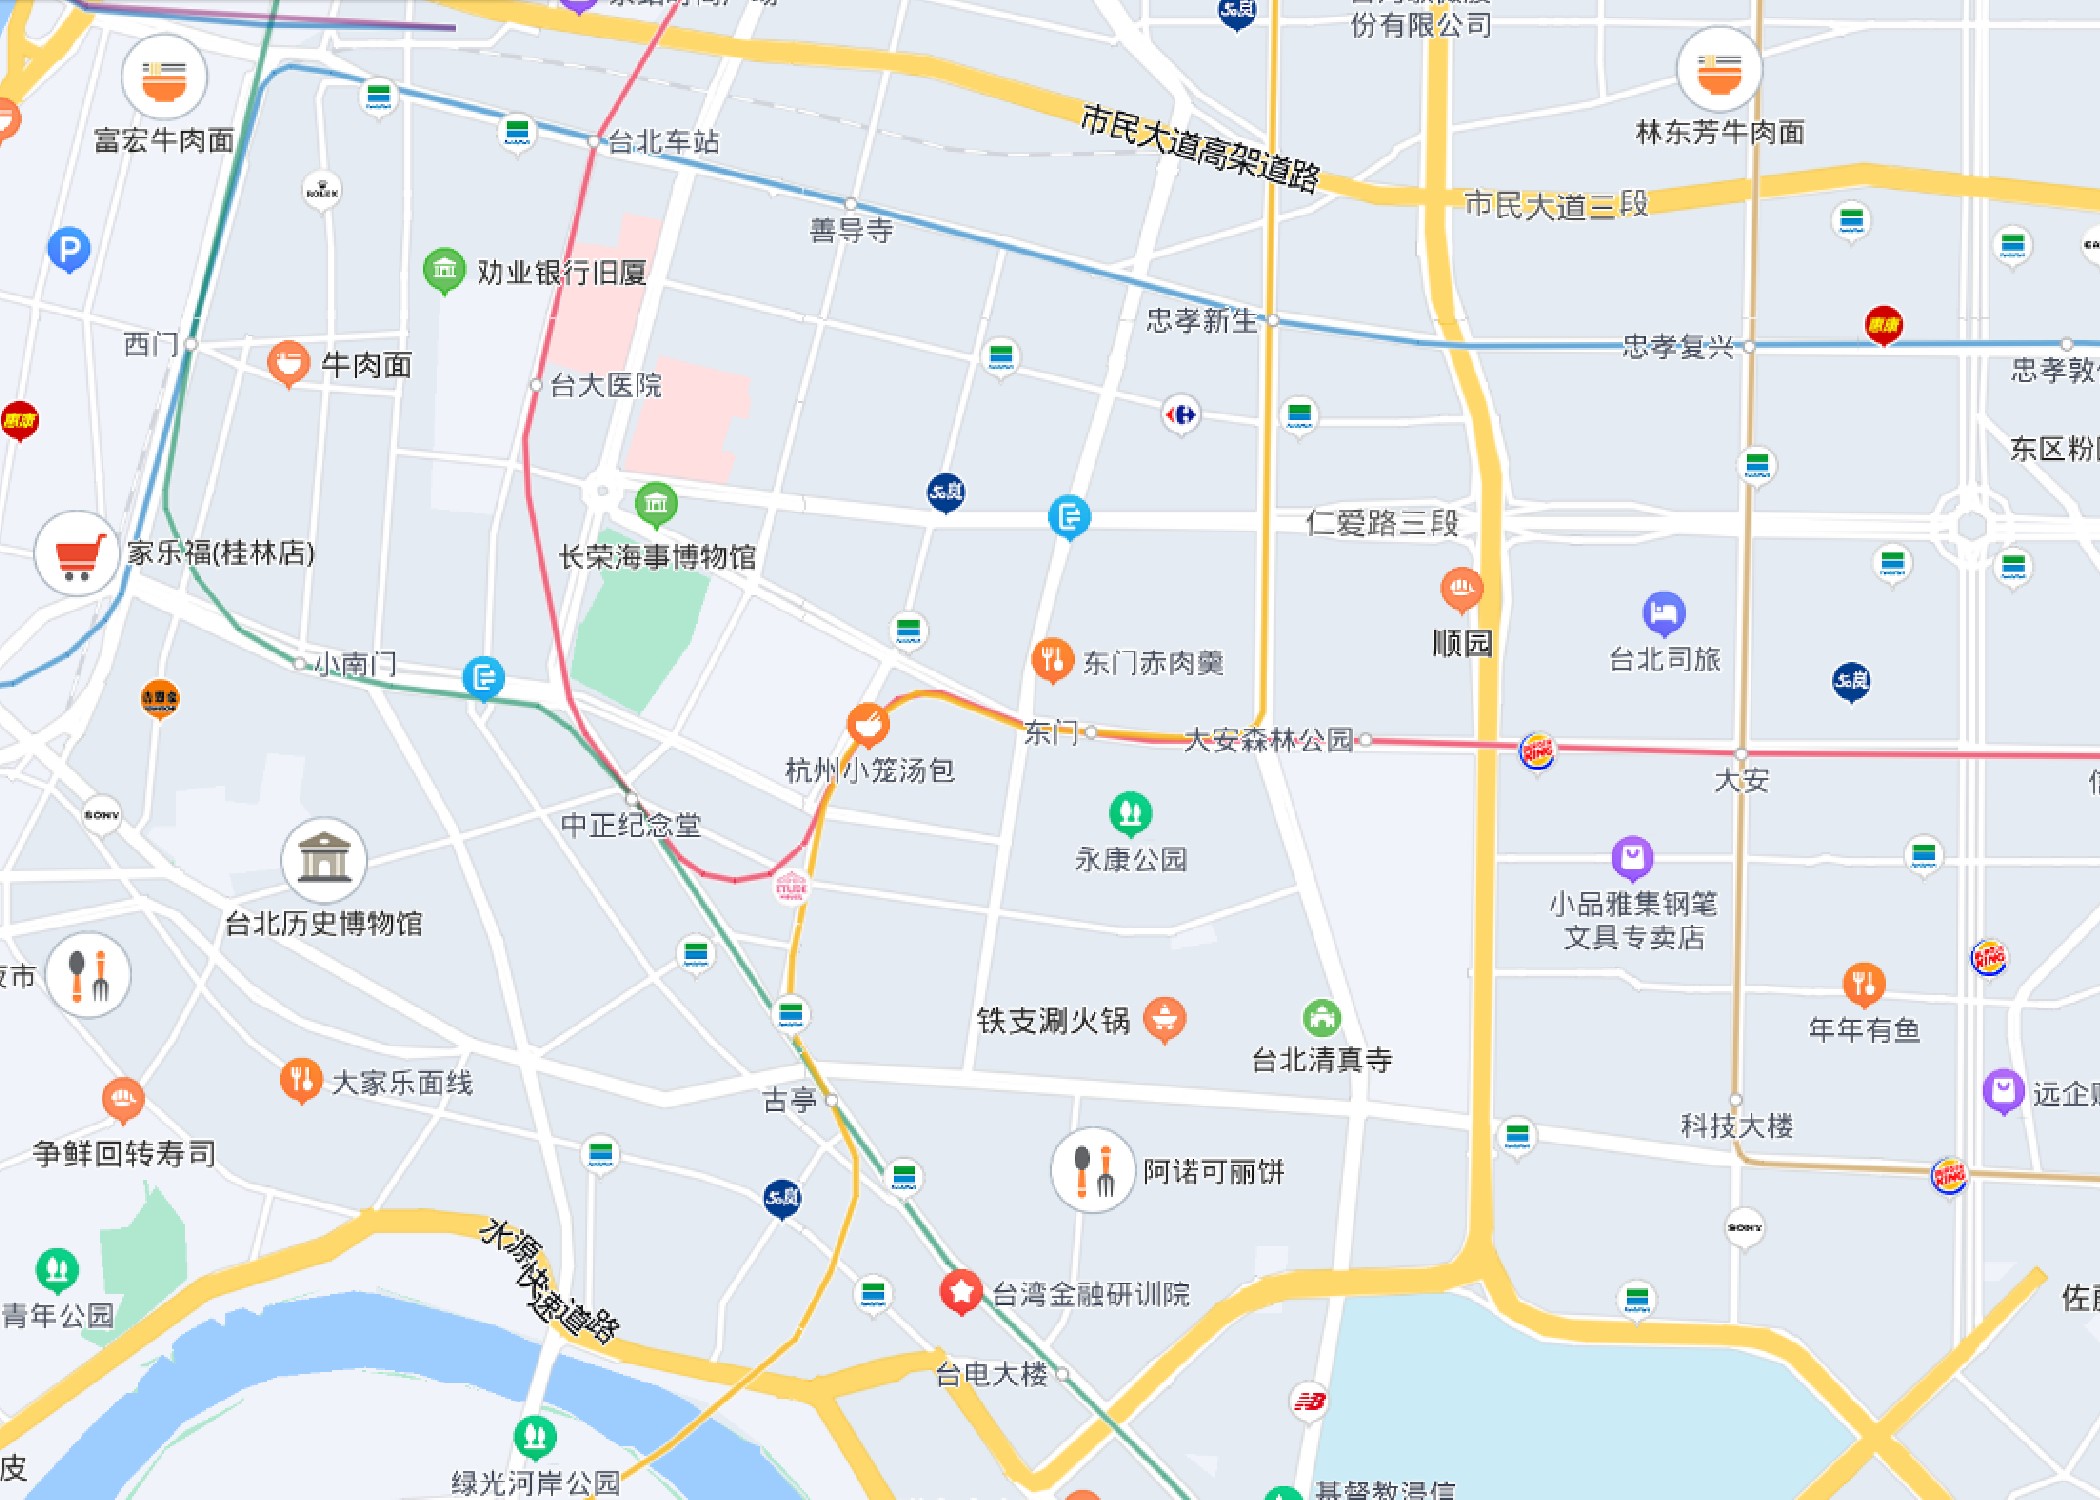 Taiwan Update on China Maps Draws More Than 1 Billion Views